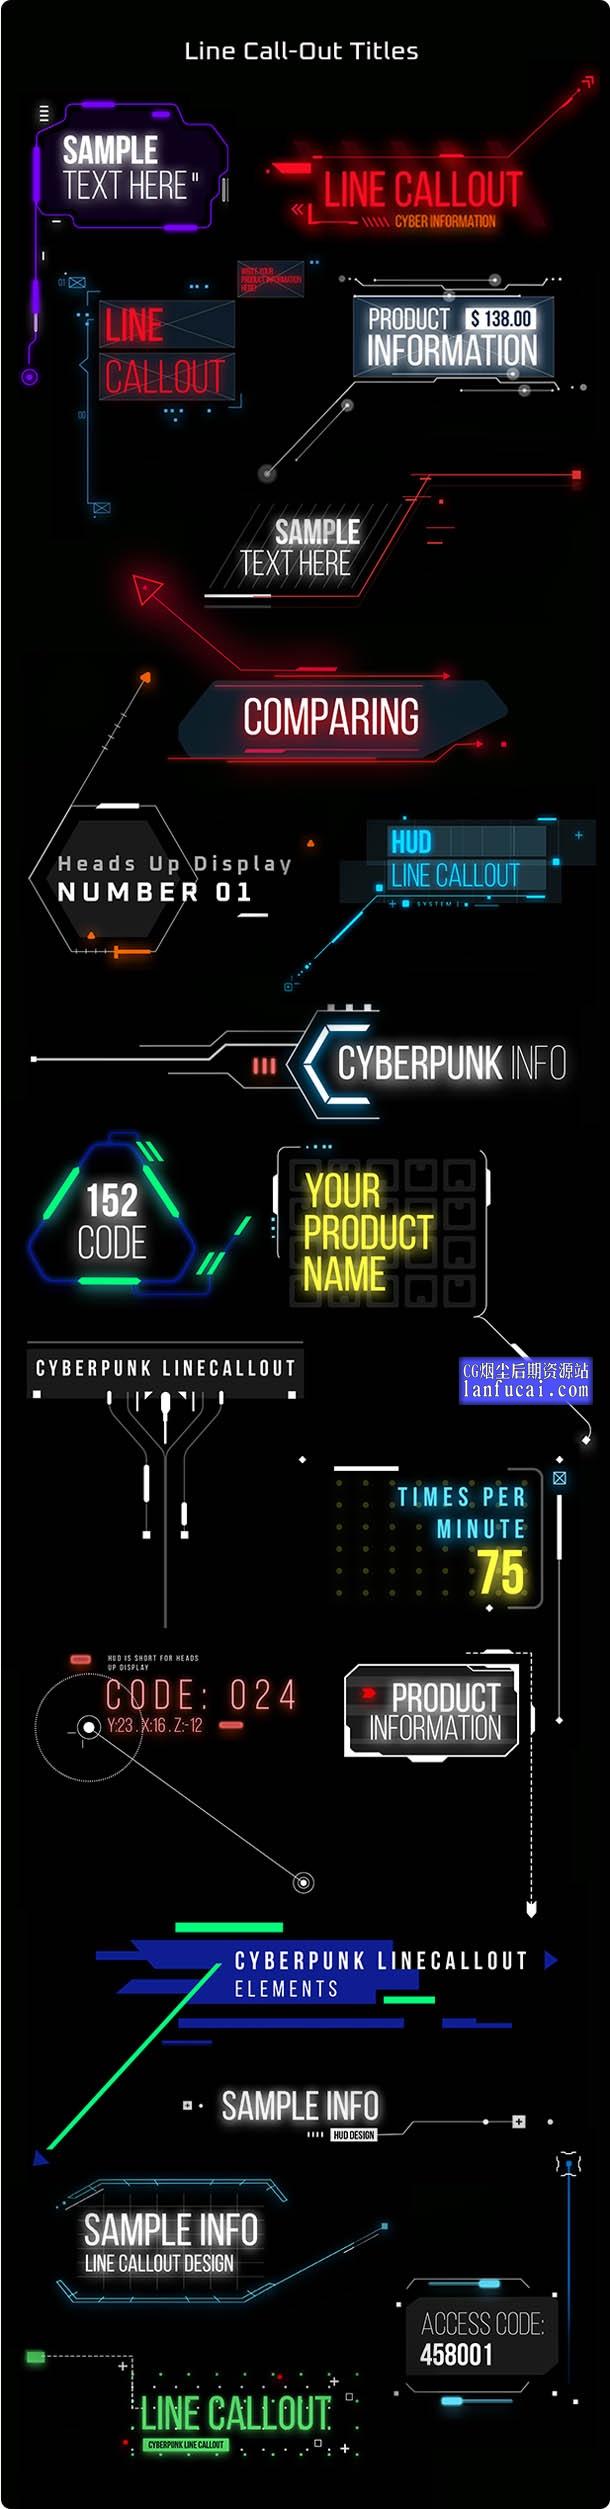 AE扩展脚本Cyberpunk Titles Pack _160个赛博朋克科幻时尚科技文字标题背景动画（Motion Factory）